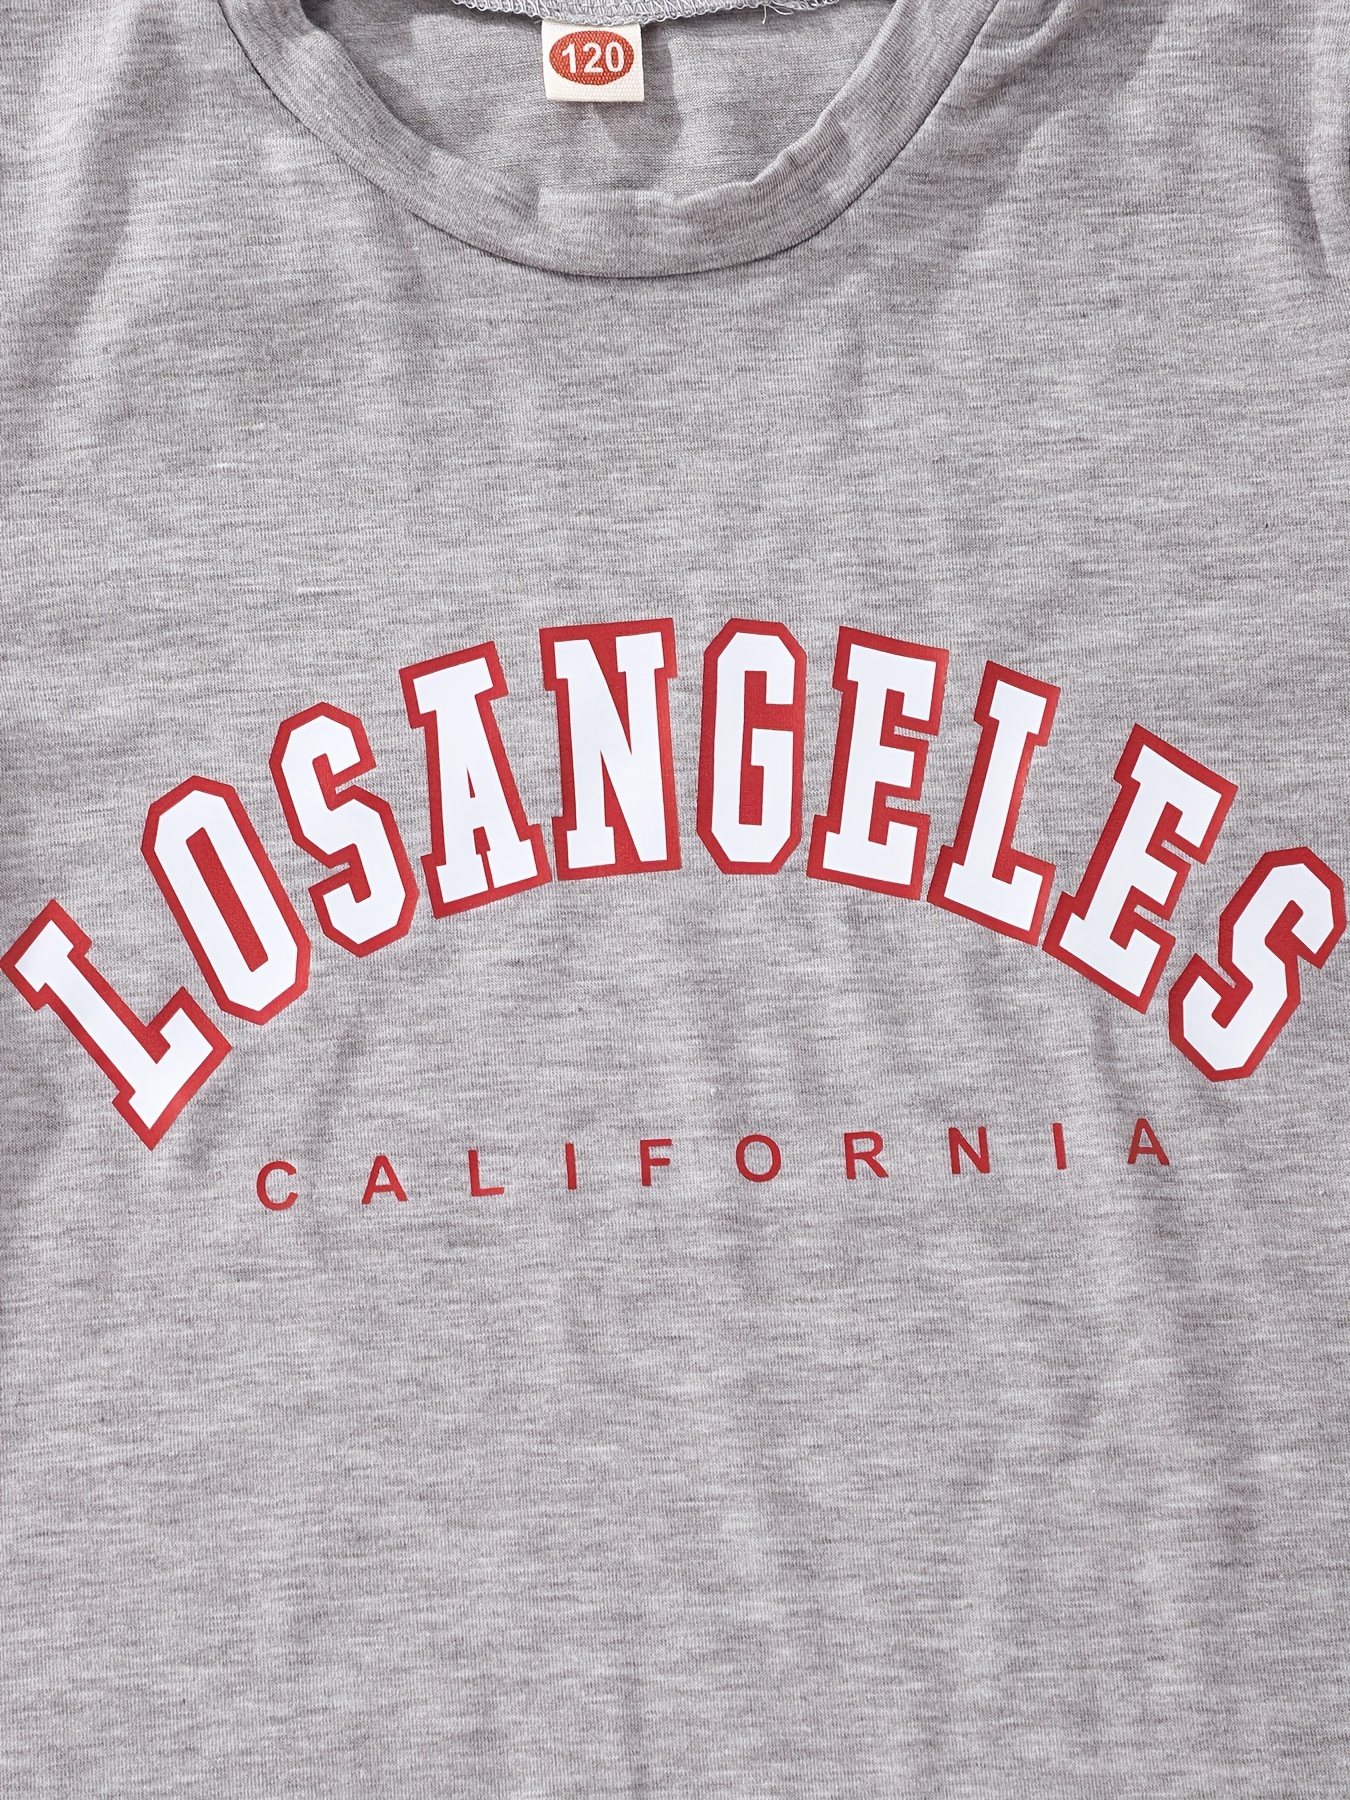 Los Angeles Graphic T-shirt